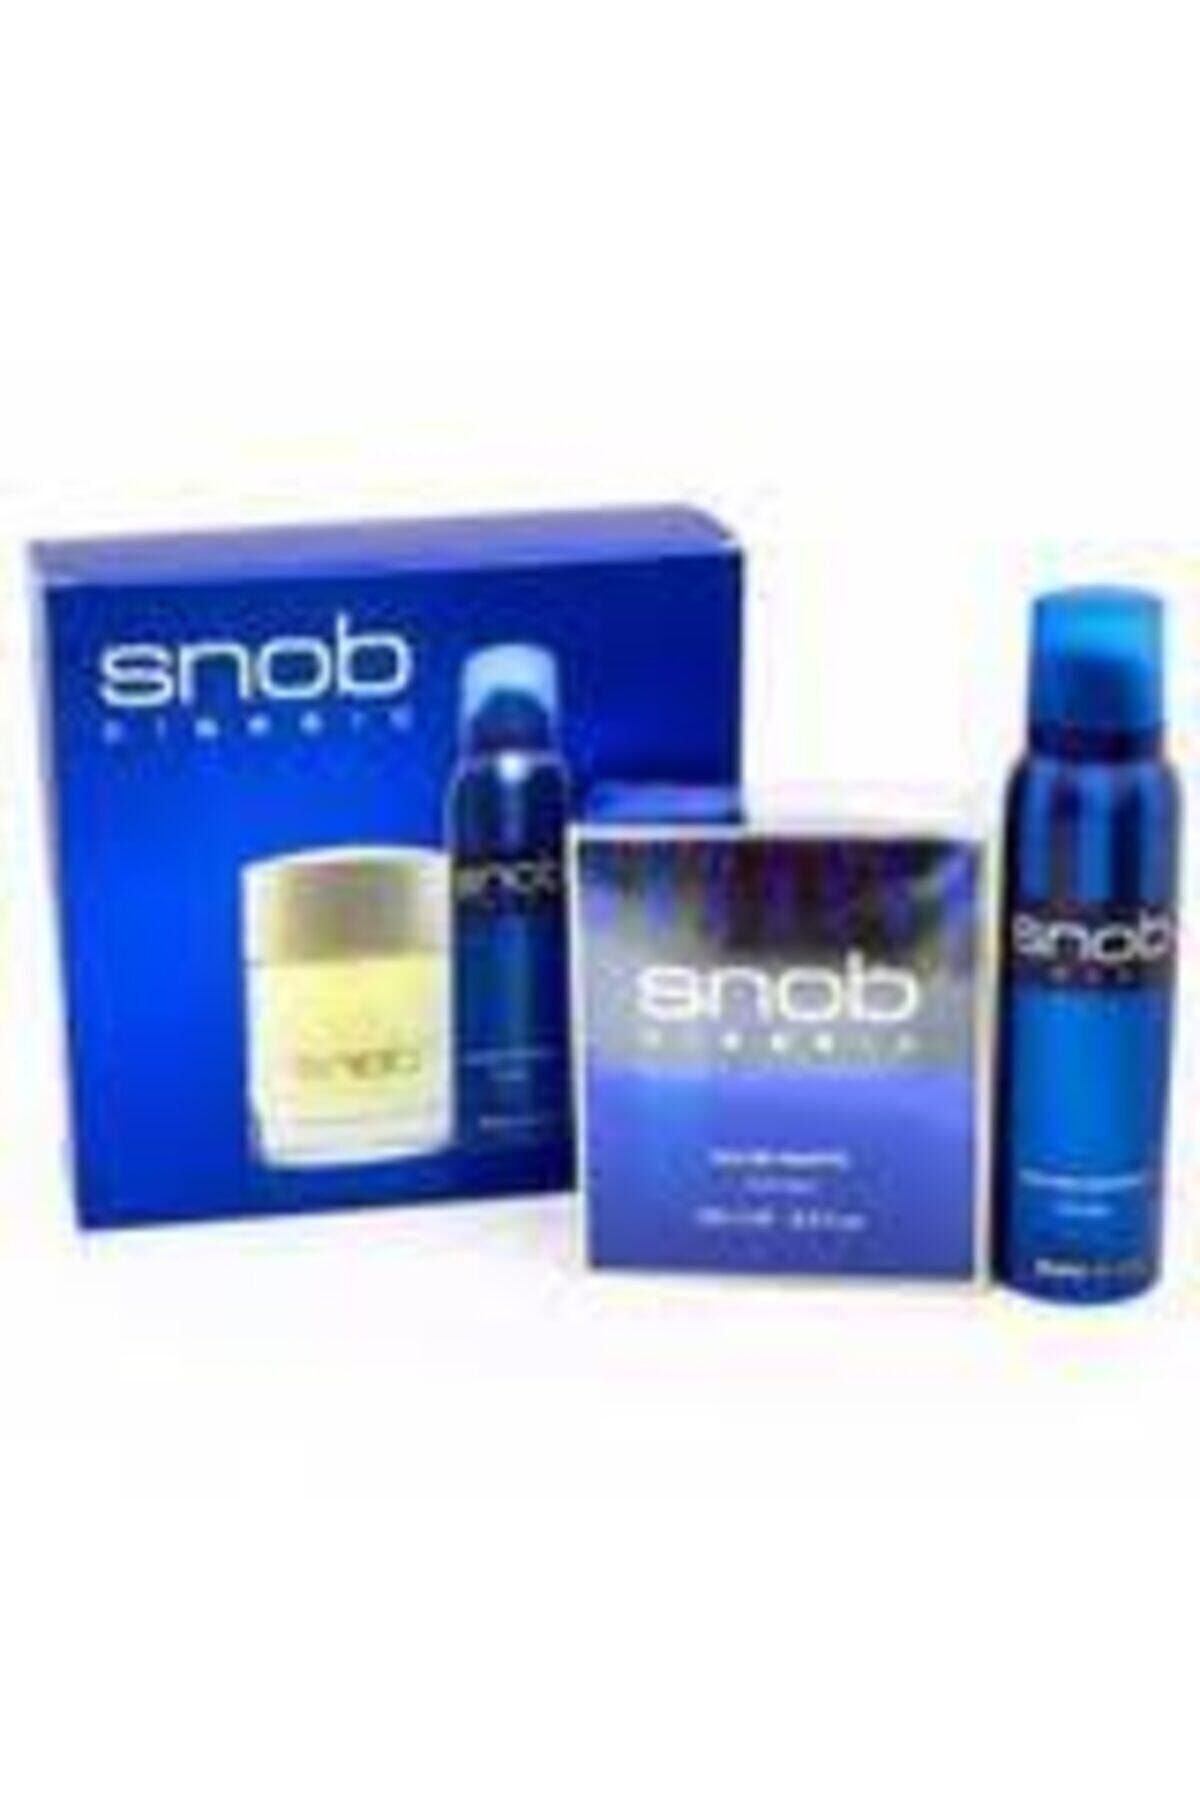 Snob Orijinal Snob Classic Edt 100 ml Erkek Parfümü snob-1 + Snob 150 ml Erkek Deodorant snob-1